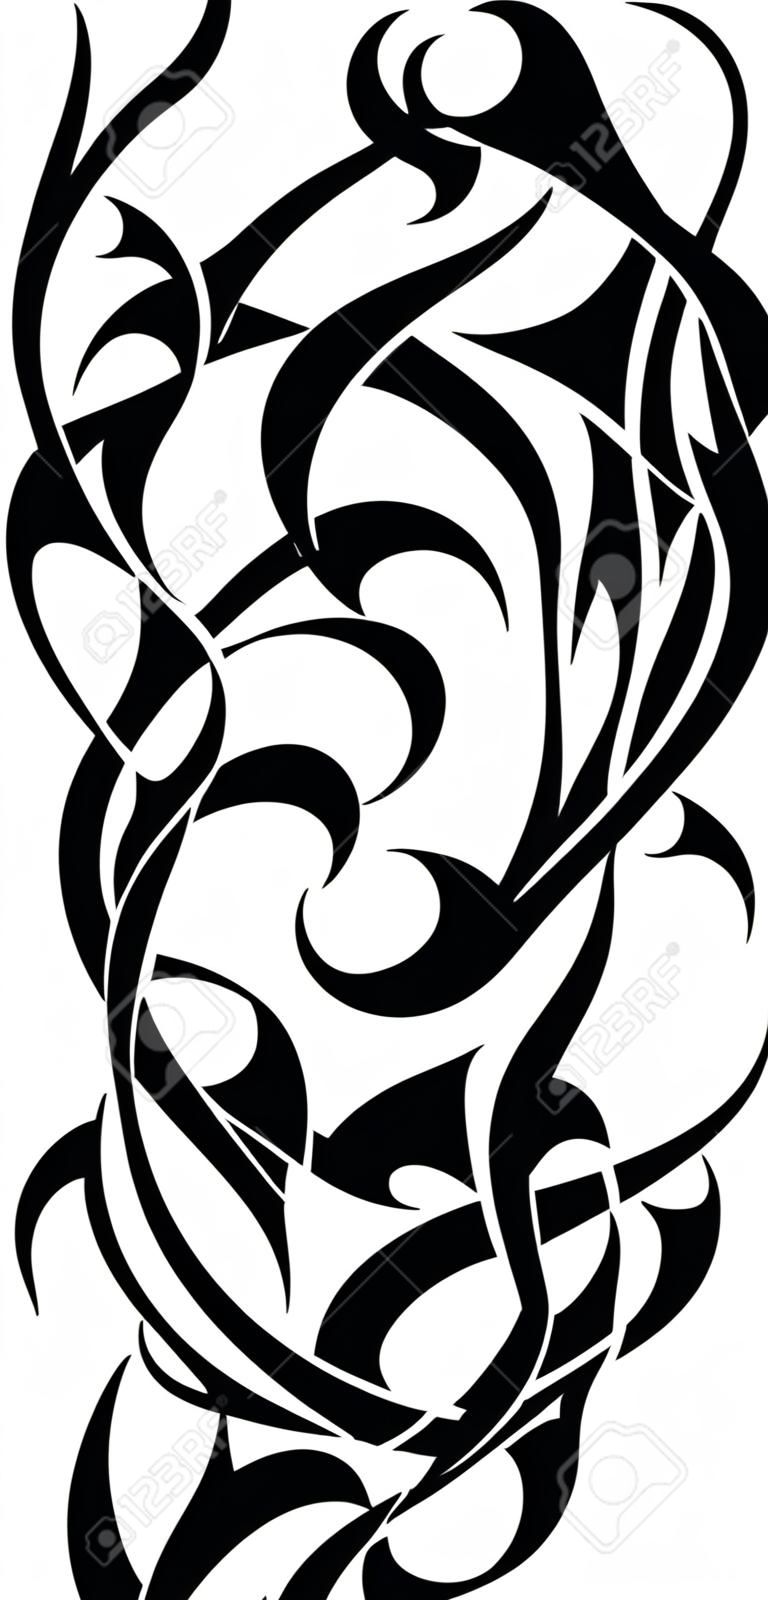 Tribal art tattoo abstract shape